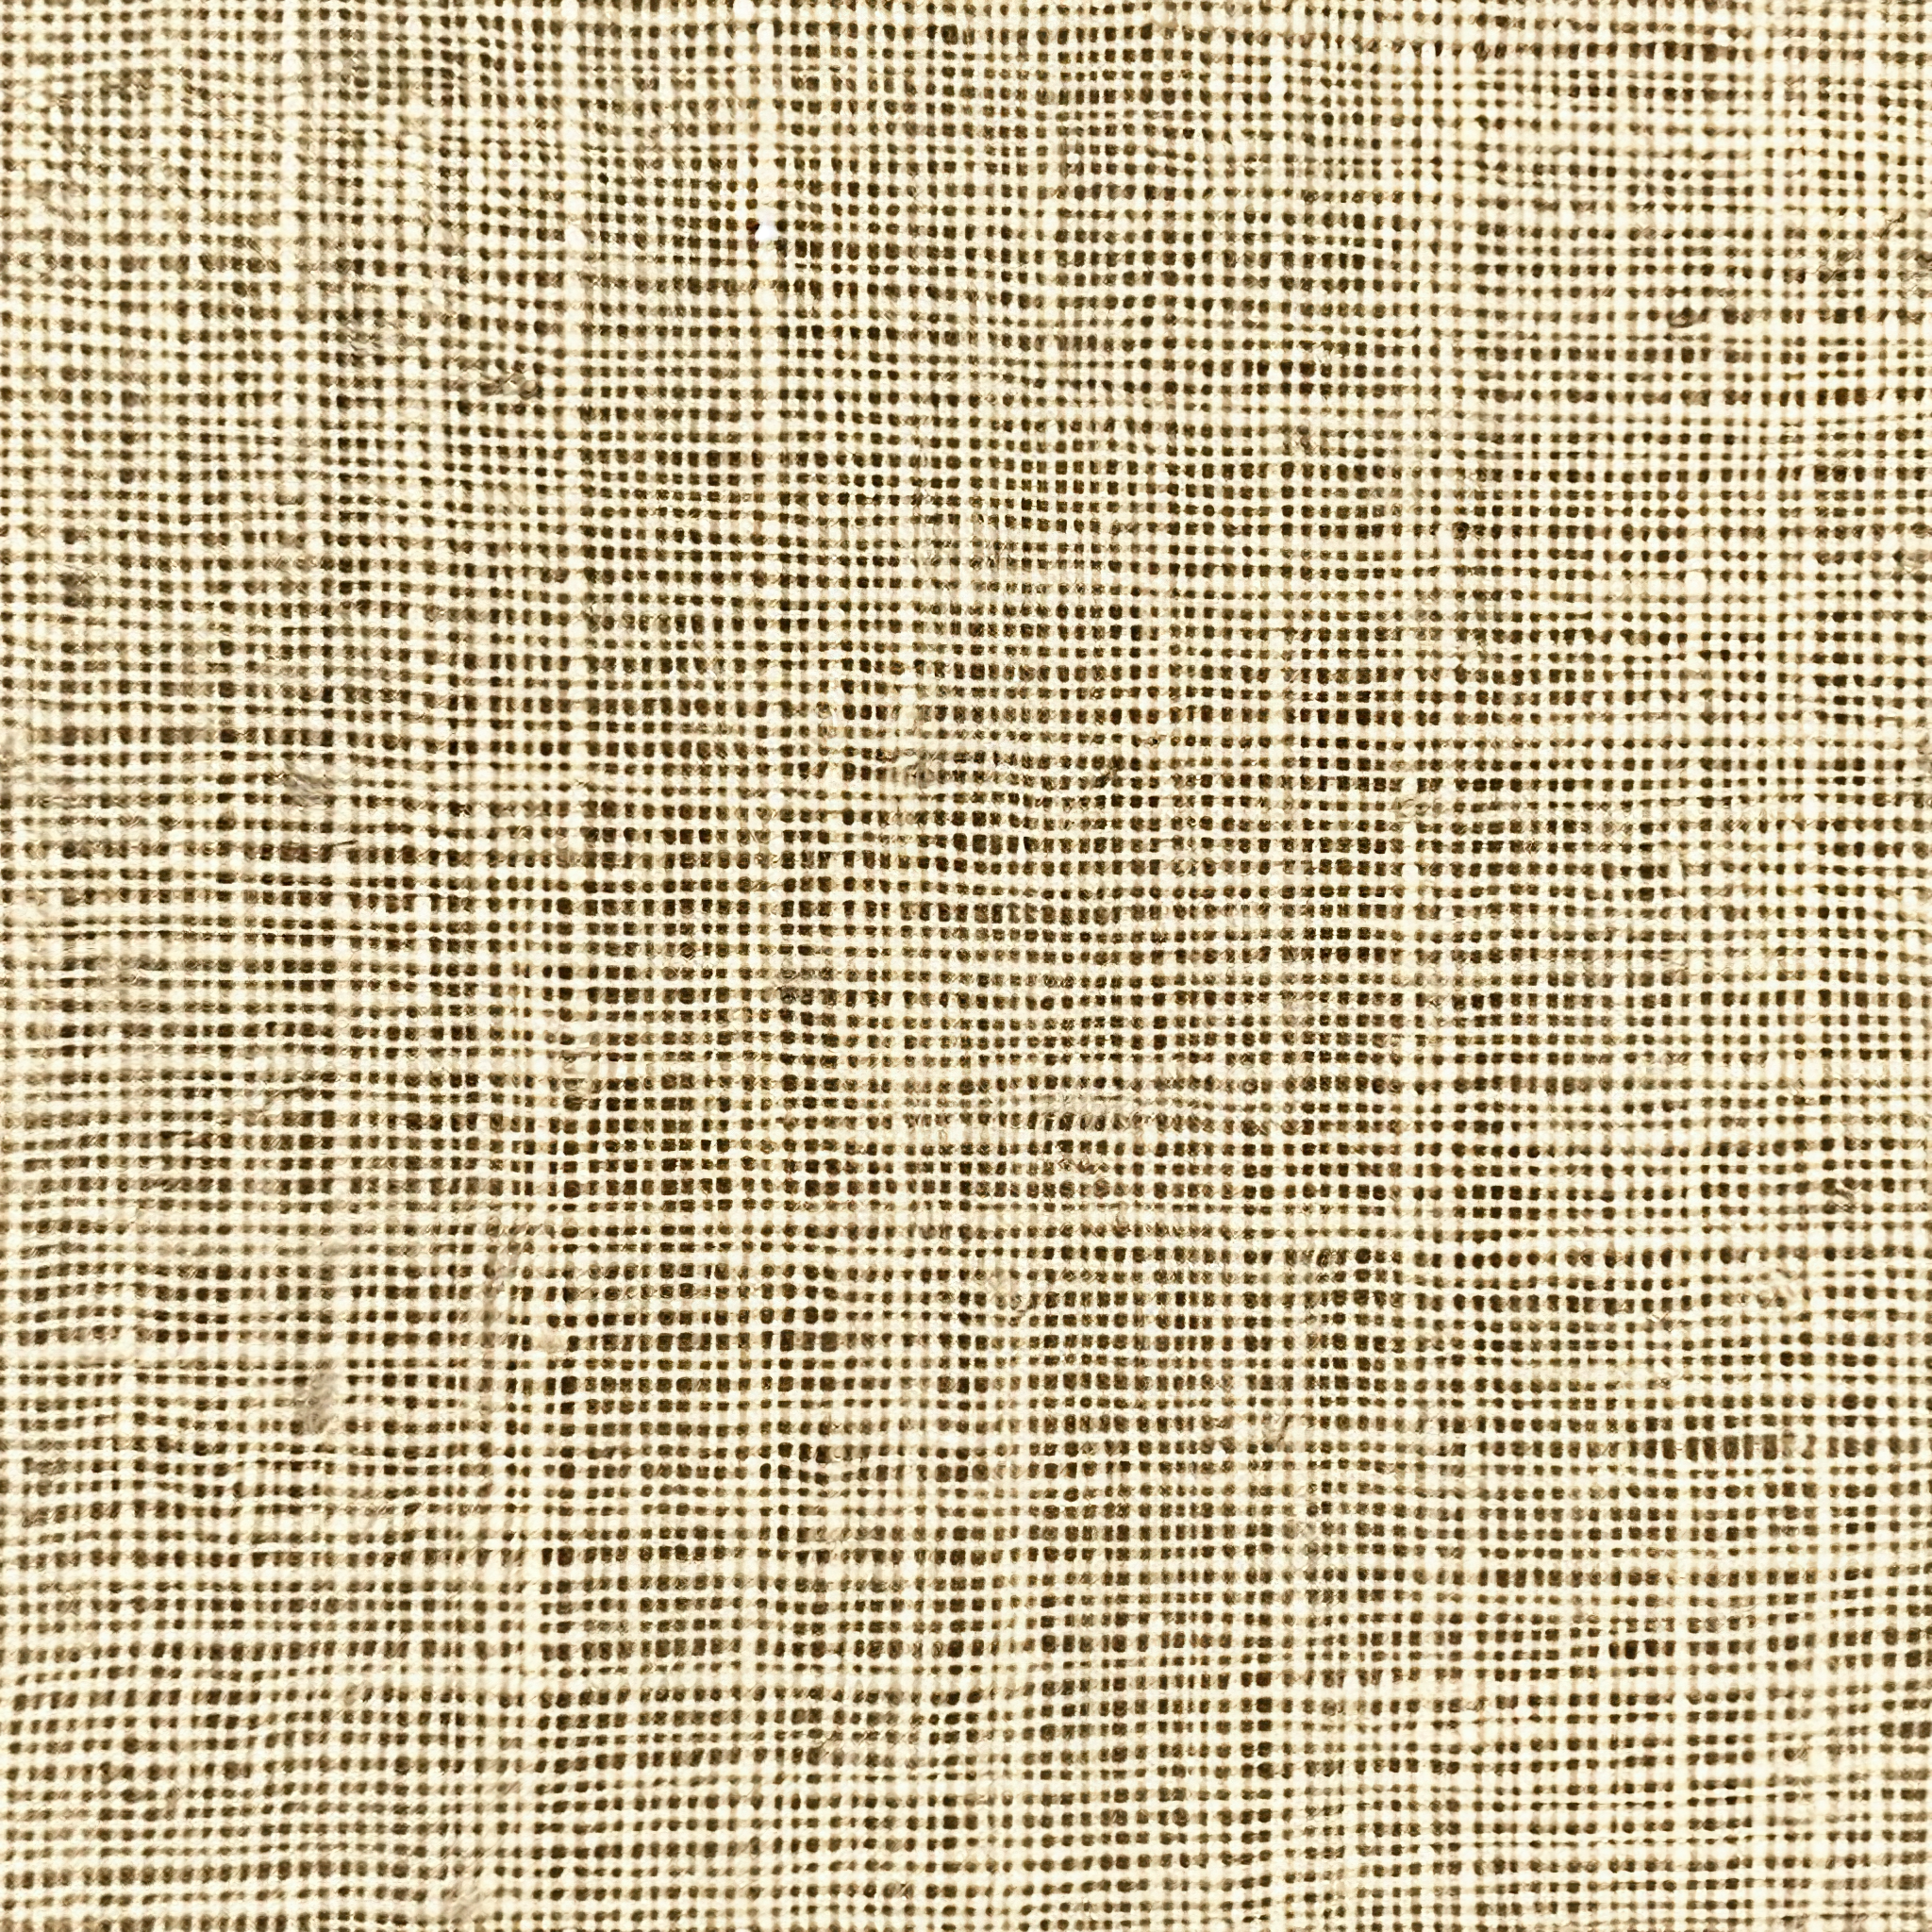 Beige cloth fabric texture